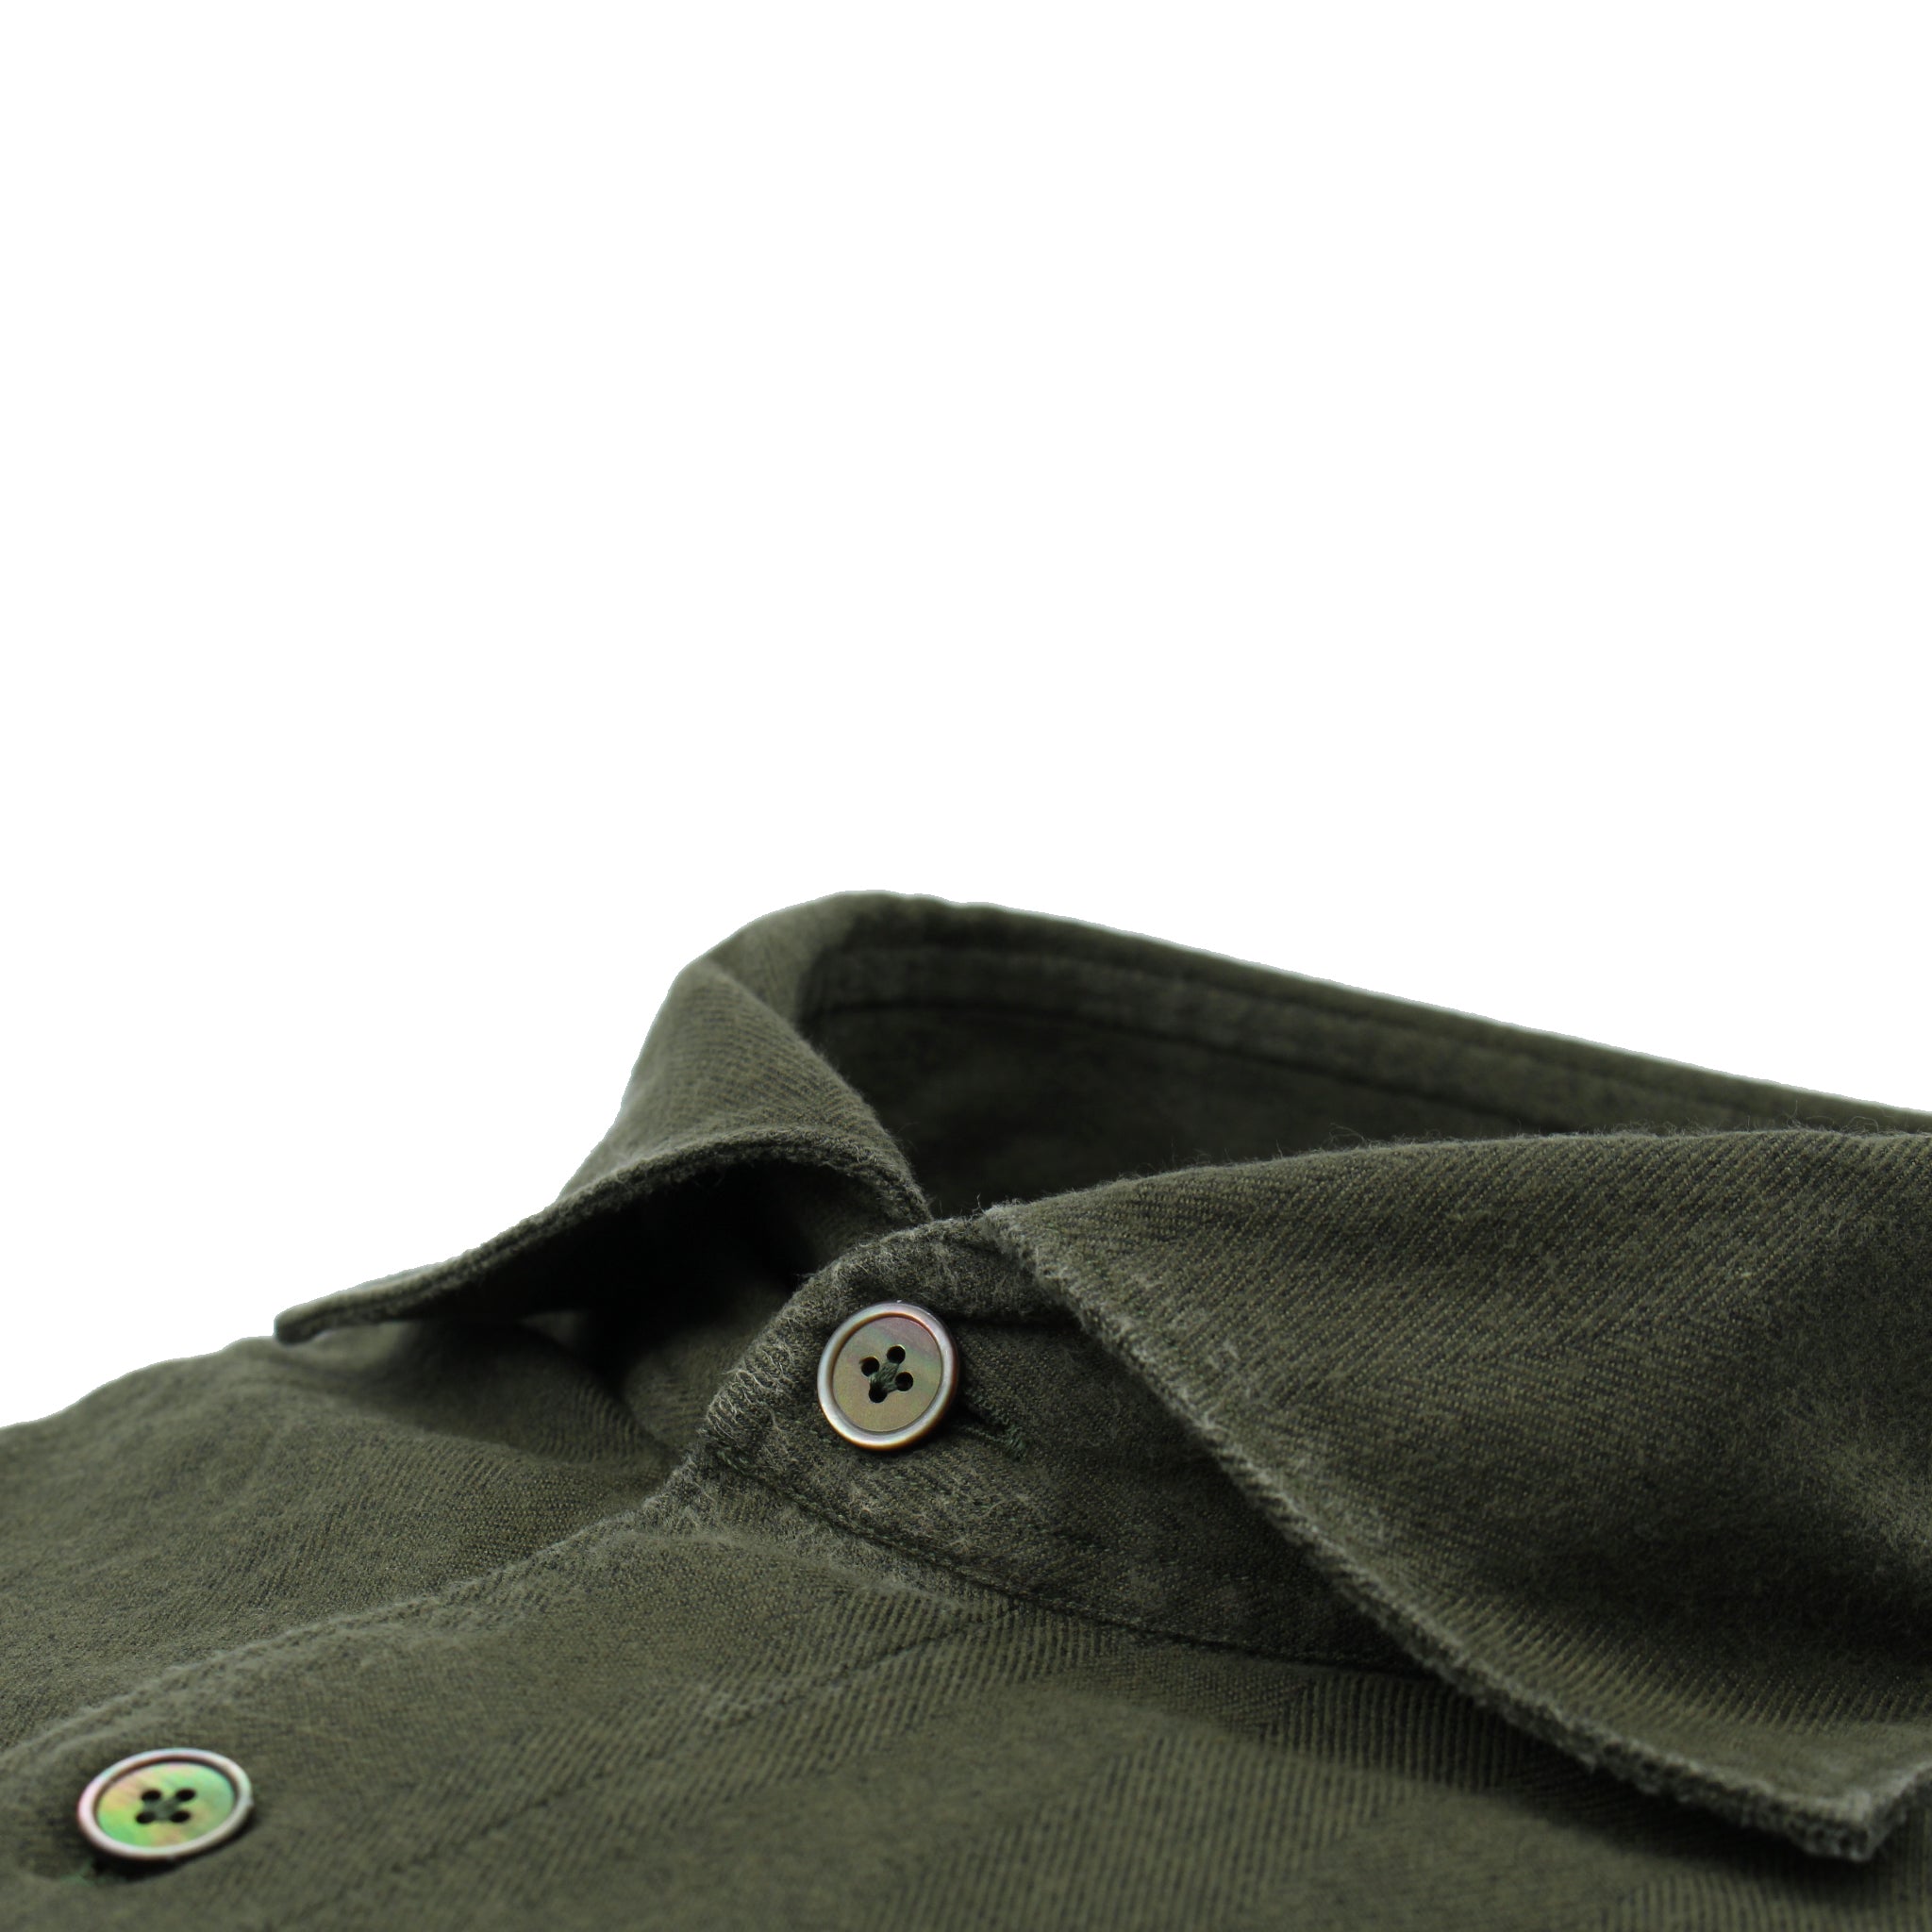 Gaeta sport shirt distressed effect dark green color